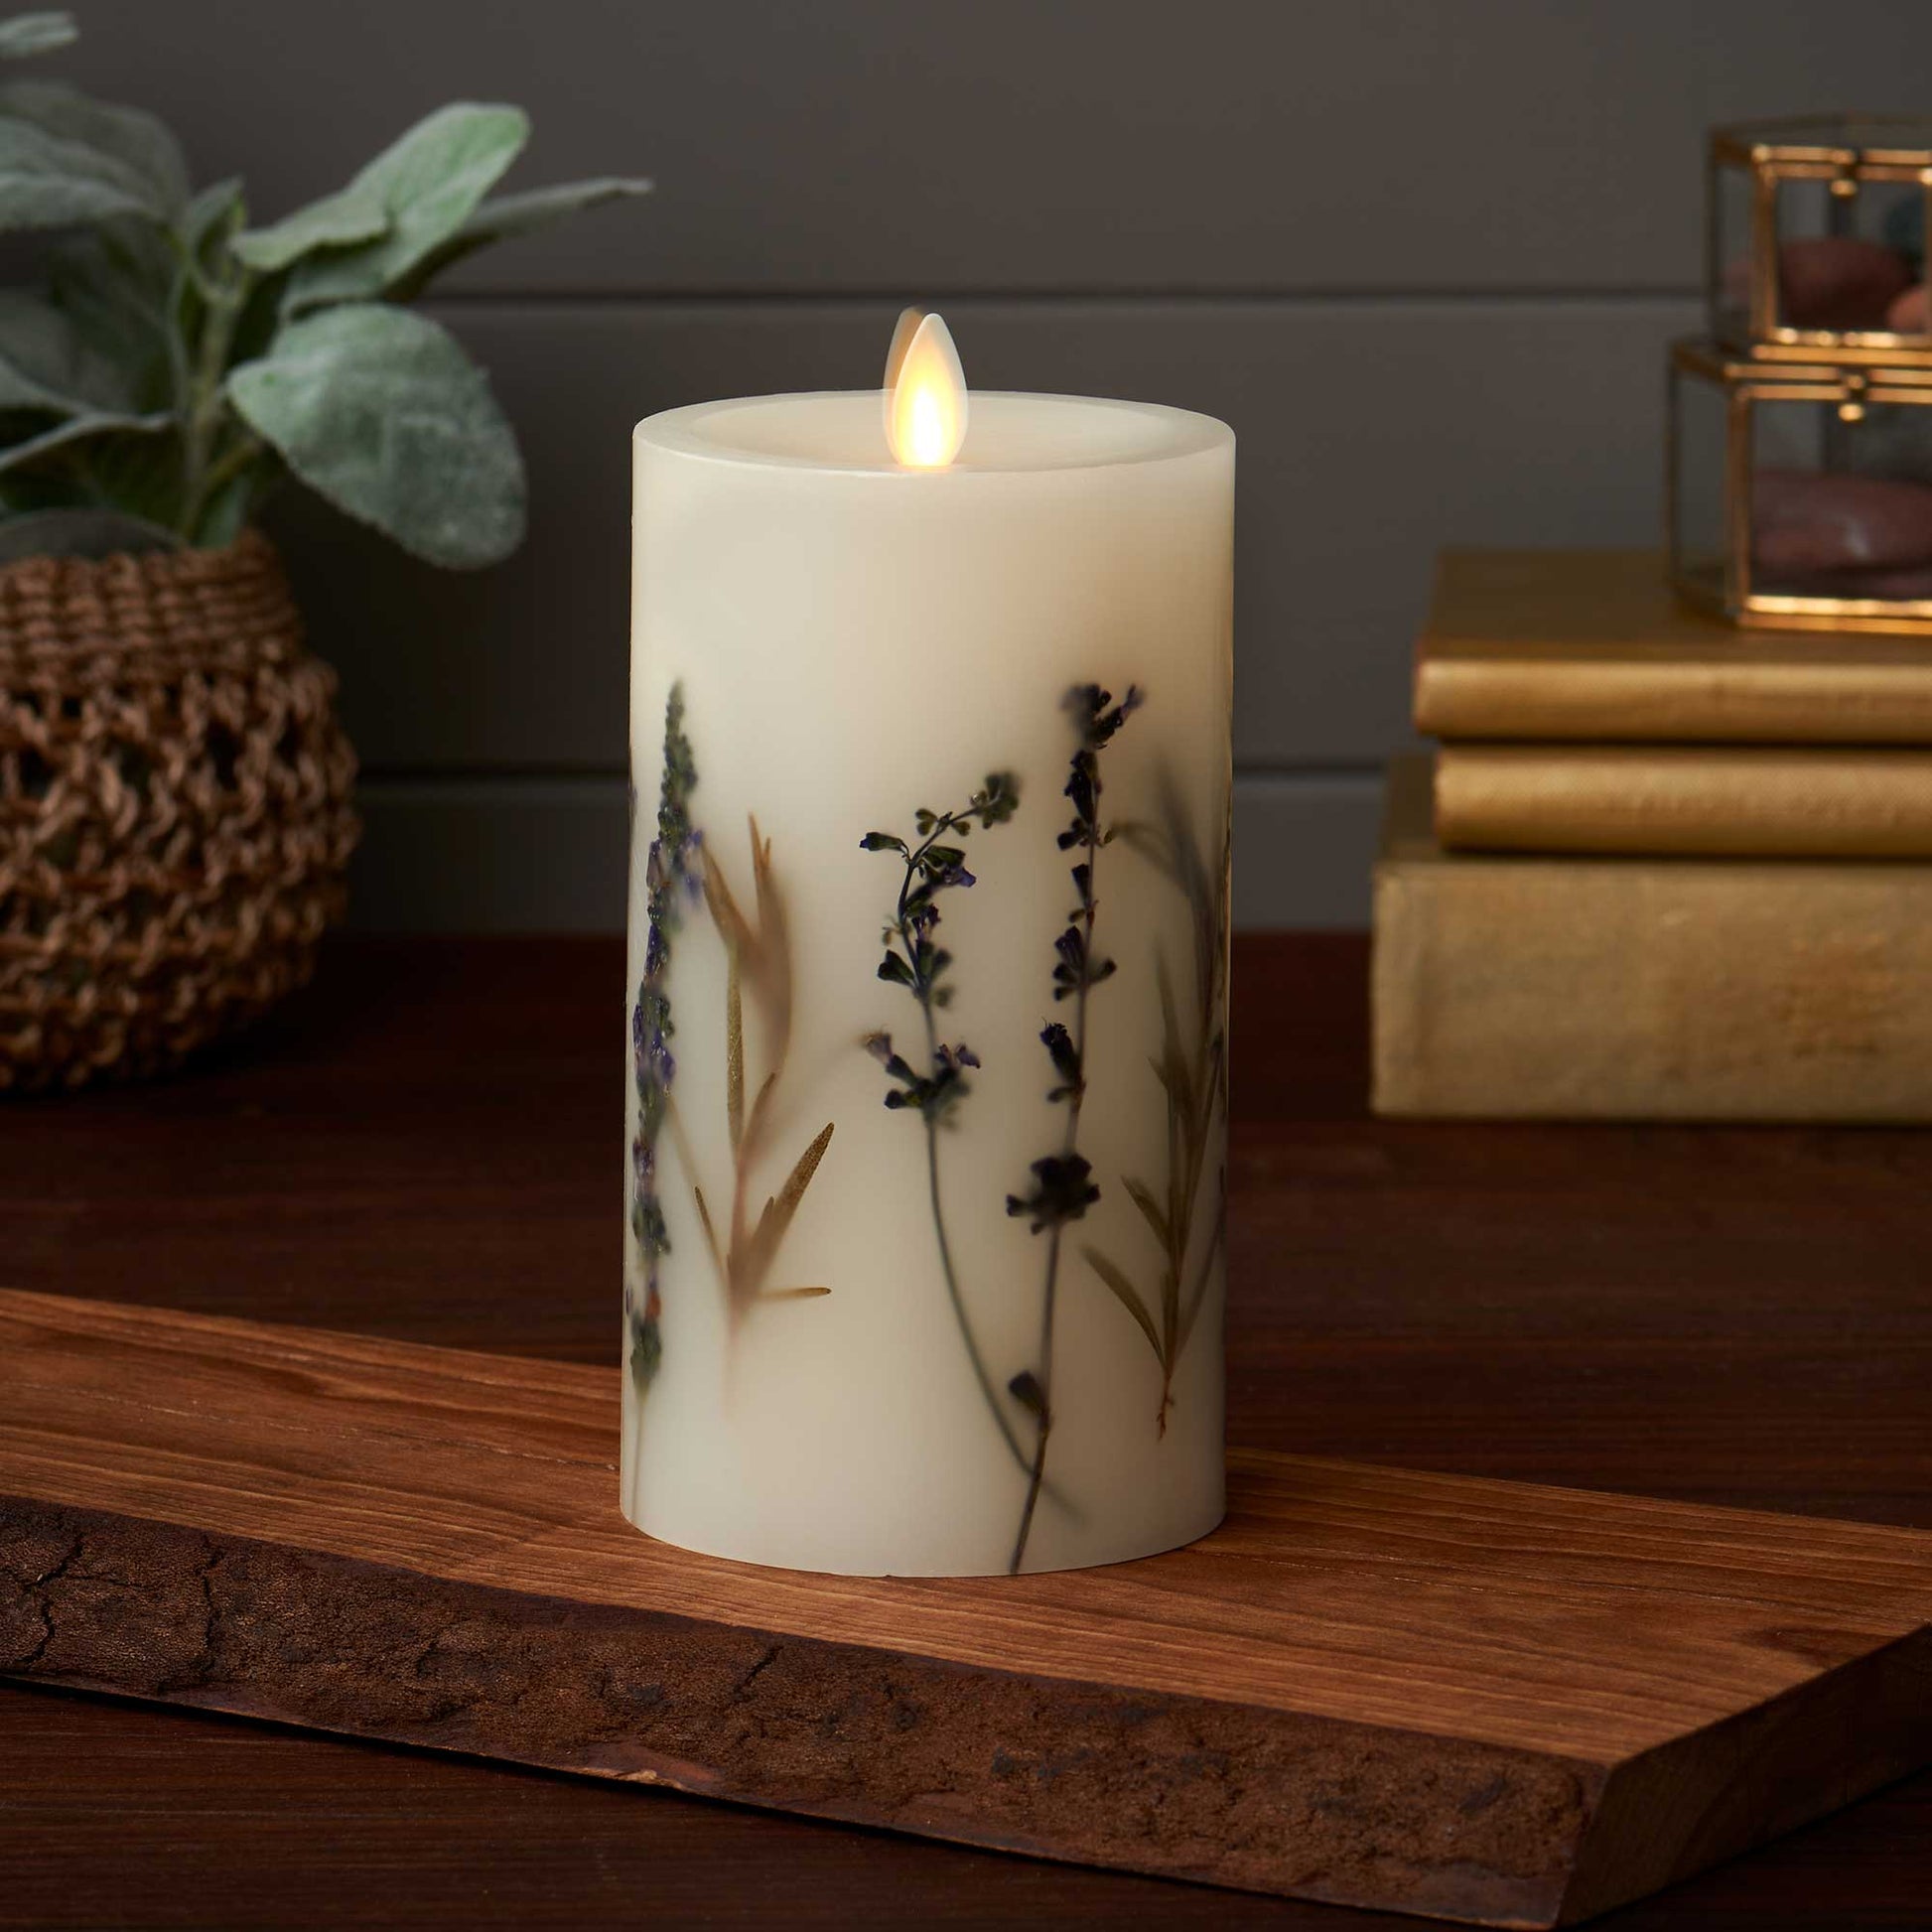 Luminara's Flameless Embedded Lavender Rosemary Candle Pillar